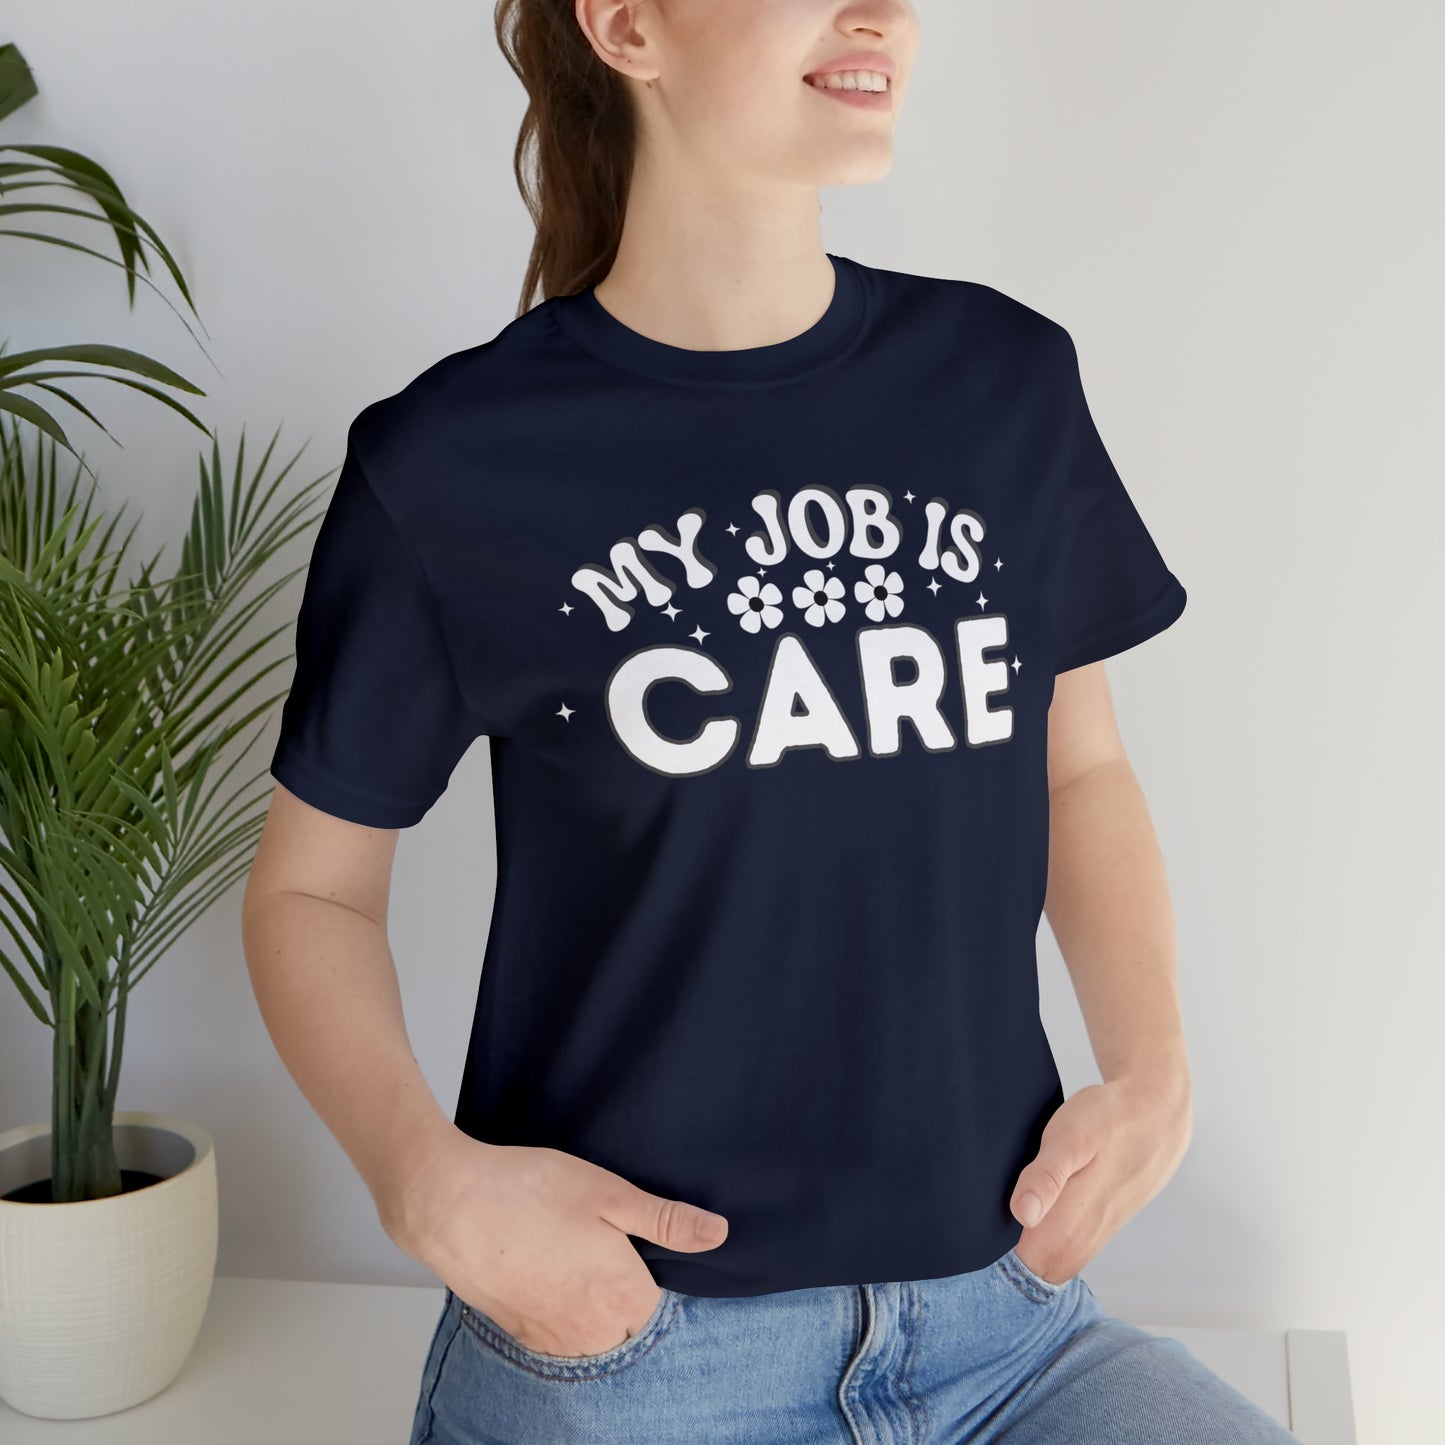 My Job is Care Shirt Doctor, Nurse, Caregiver, Social Worker, Psychologist, Therapist, Paramedic, Childcare provider, Hospice Workers, Animal Caretaker,